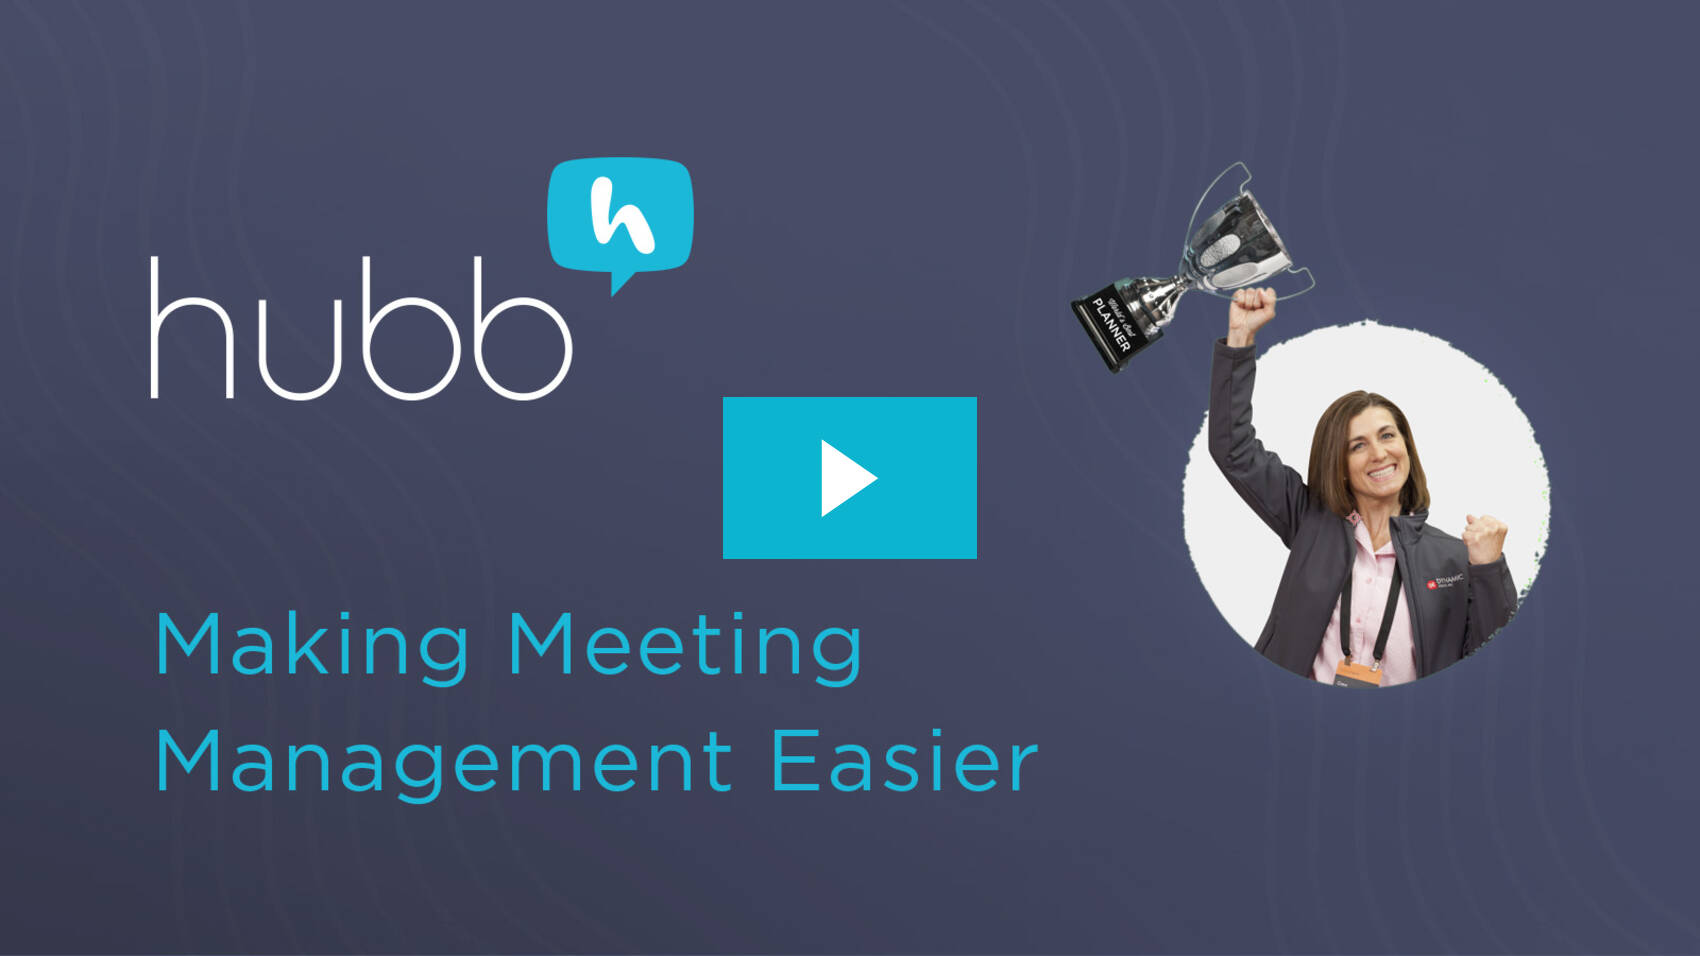 Hubb - Making Meeting Management Easier